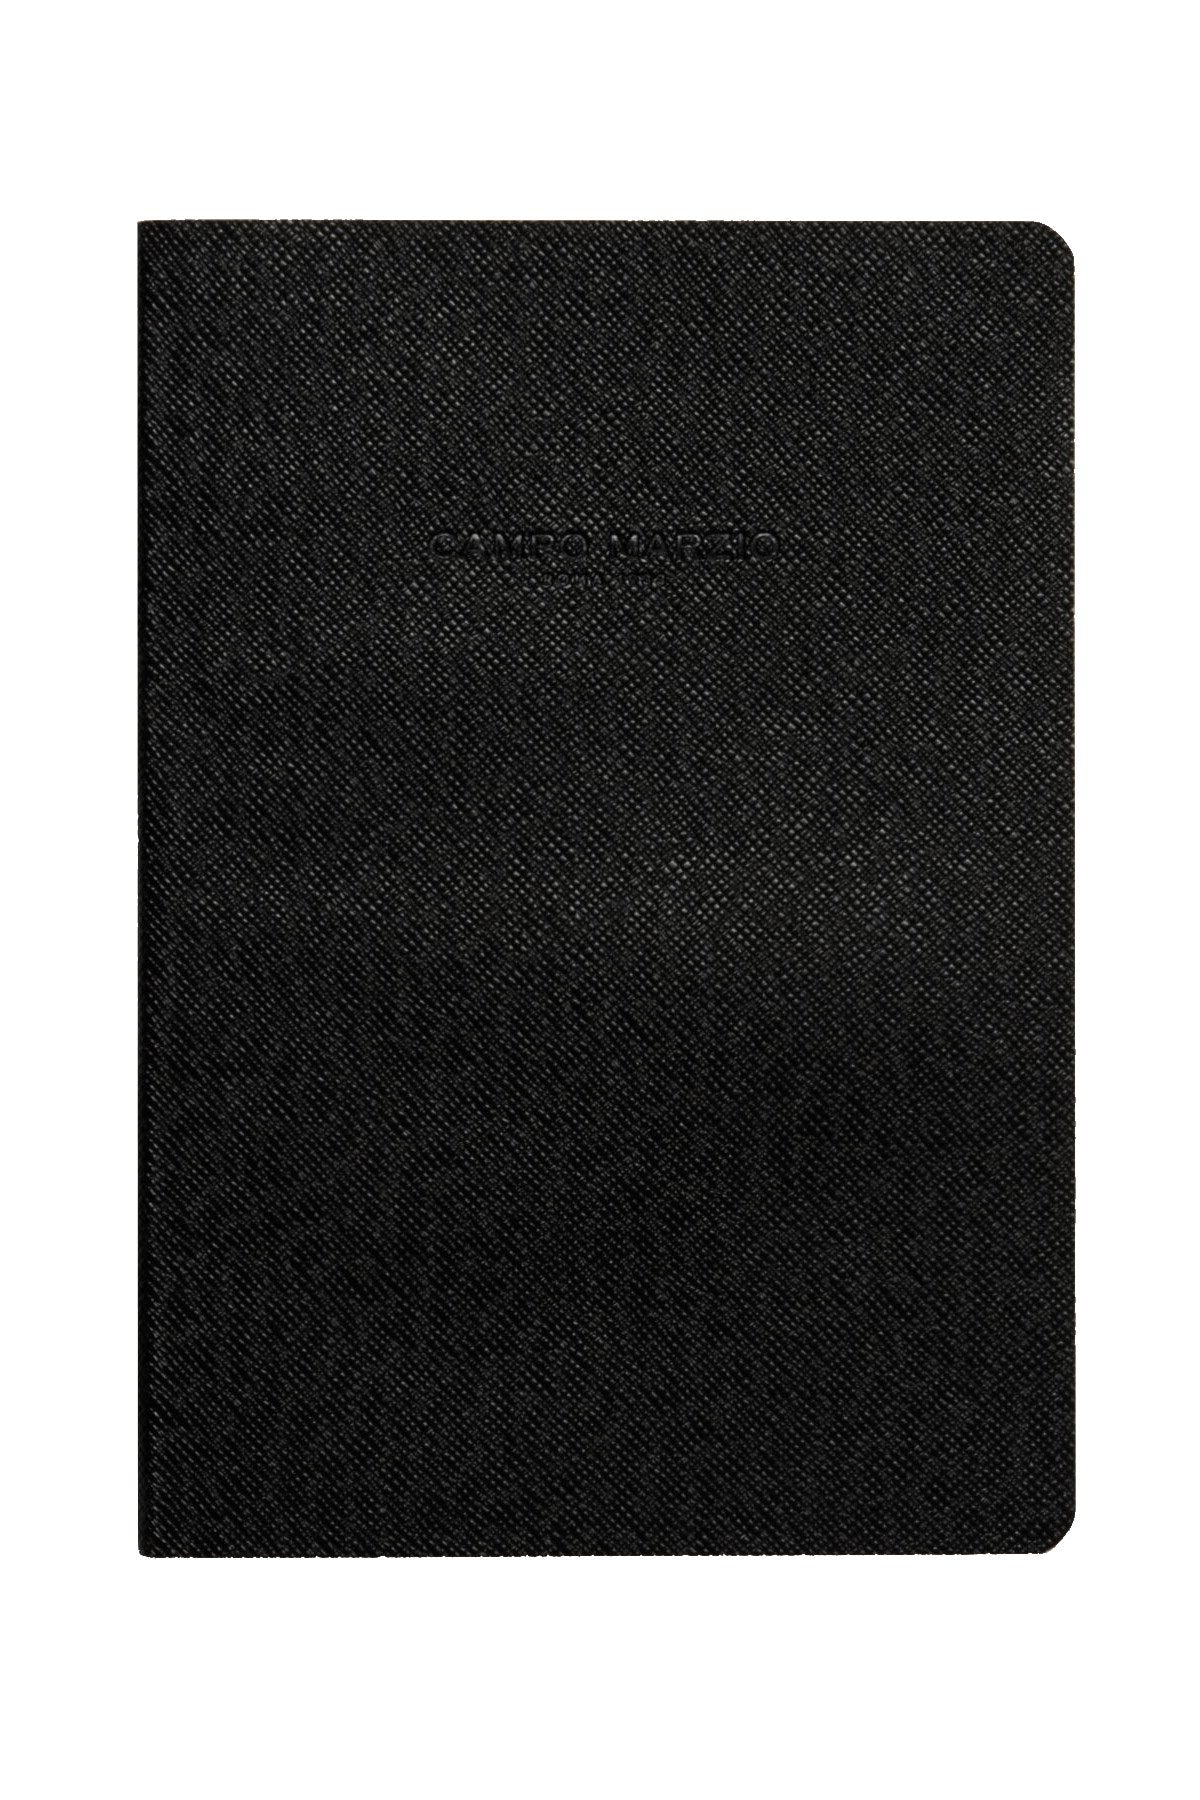 Campo Marzio Black/White Pebbled Faux-Leather Journal